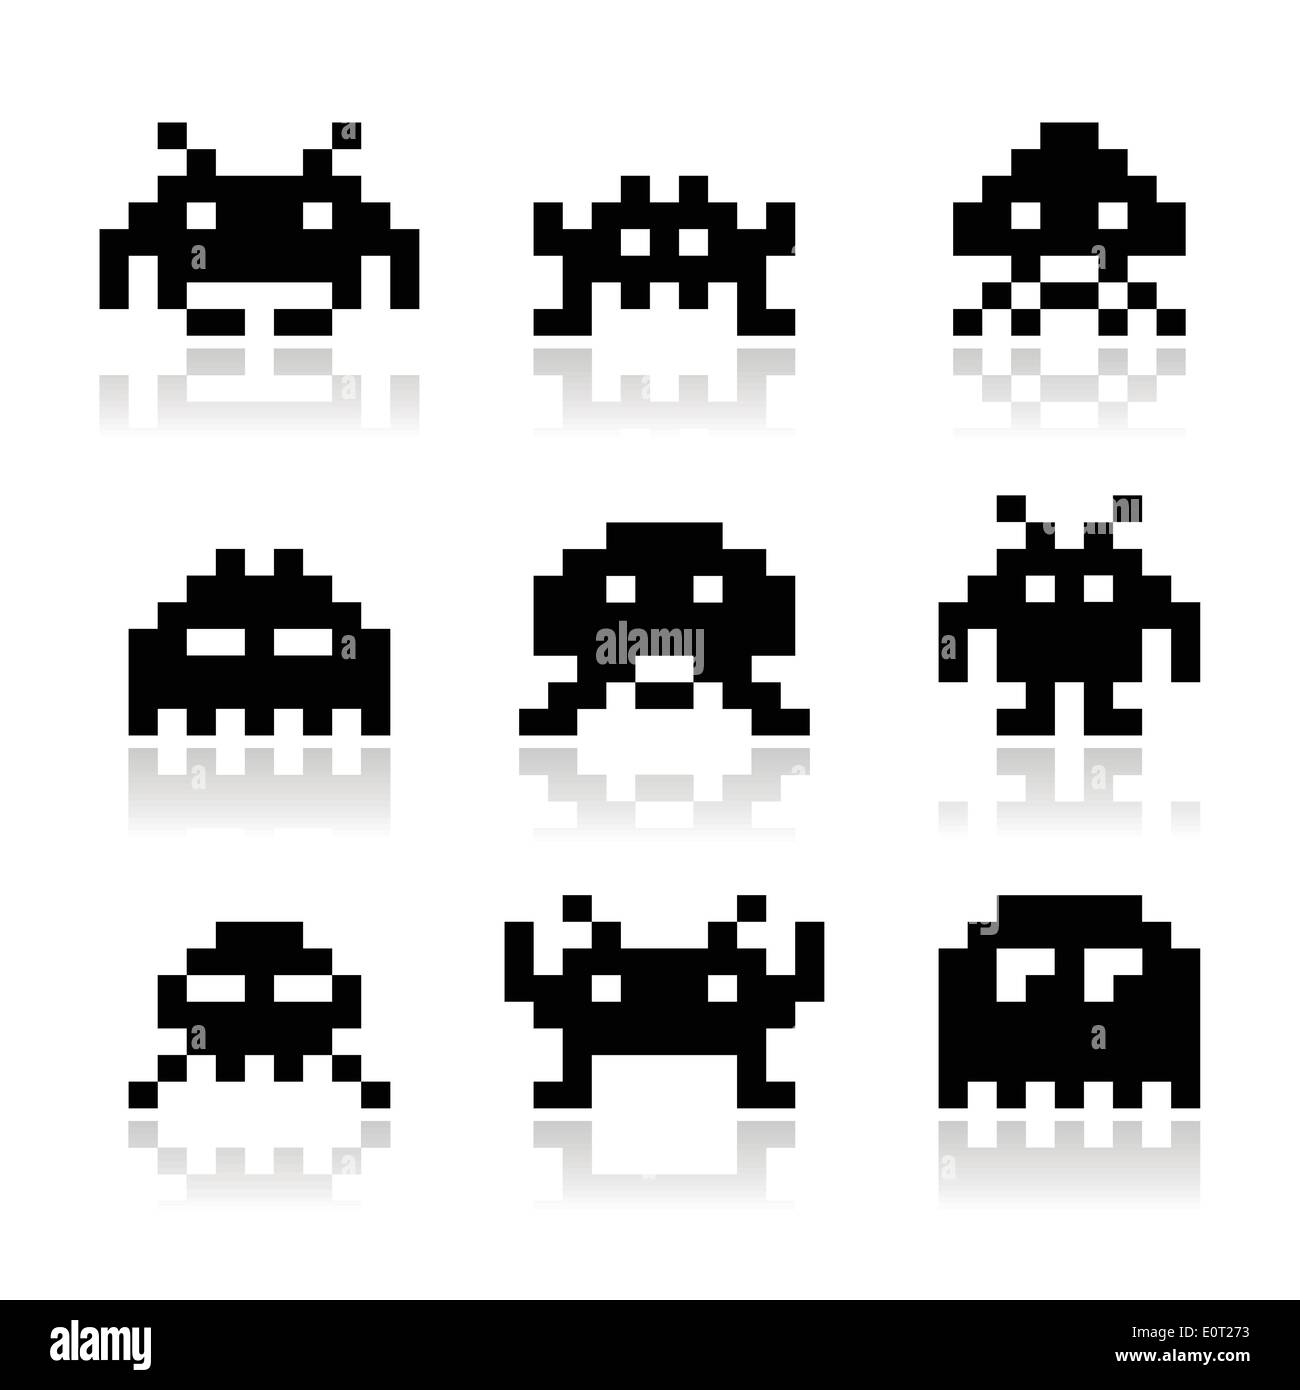 space-invaders-8bit-aliens-icons-set-E0T273.jpg